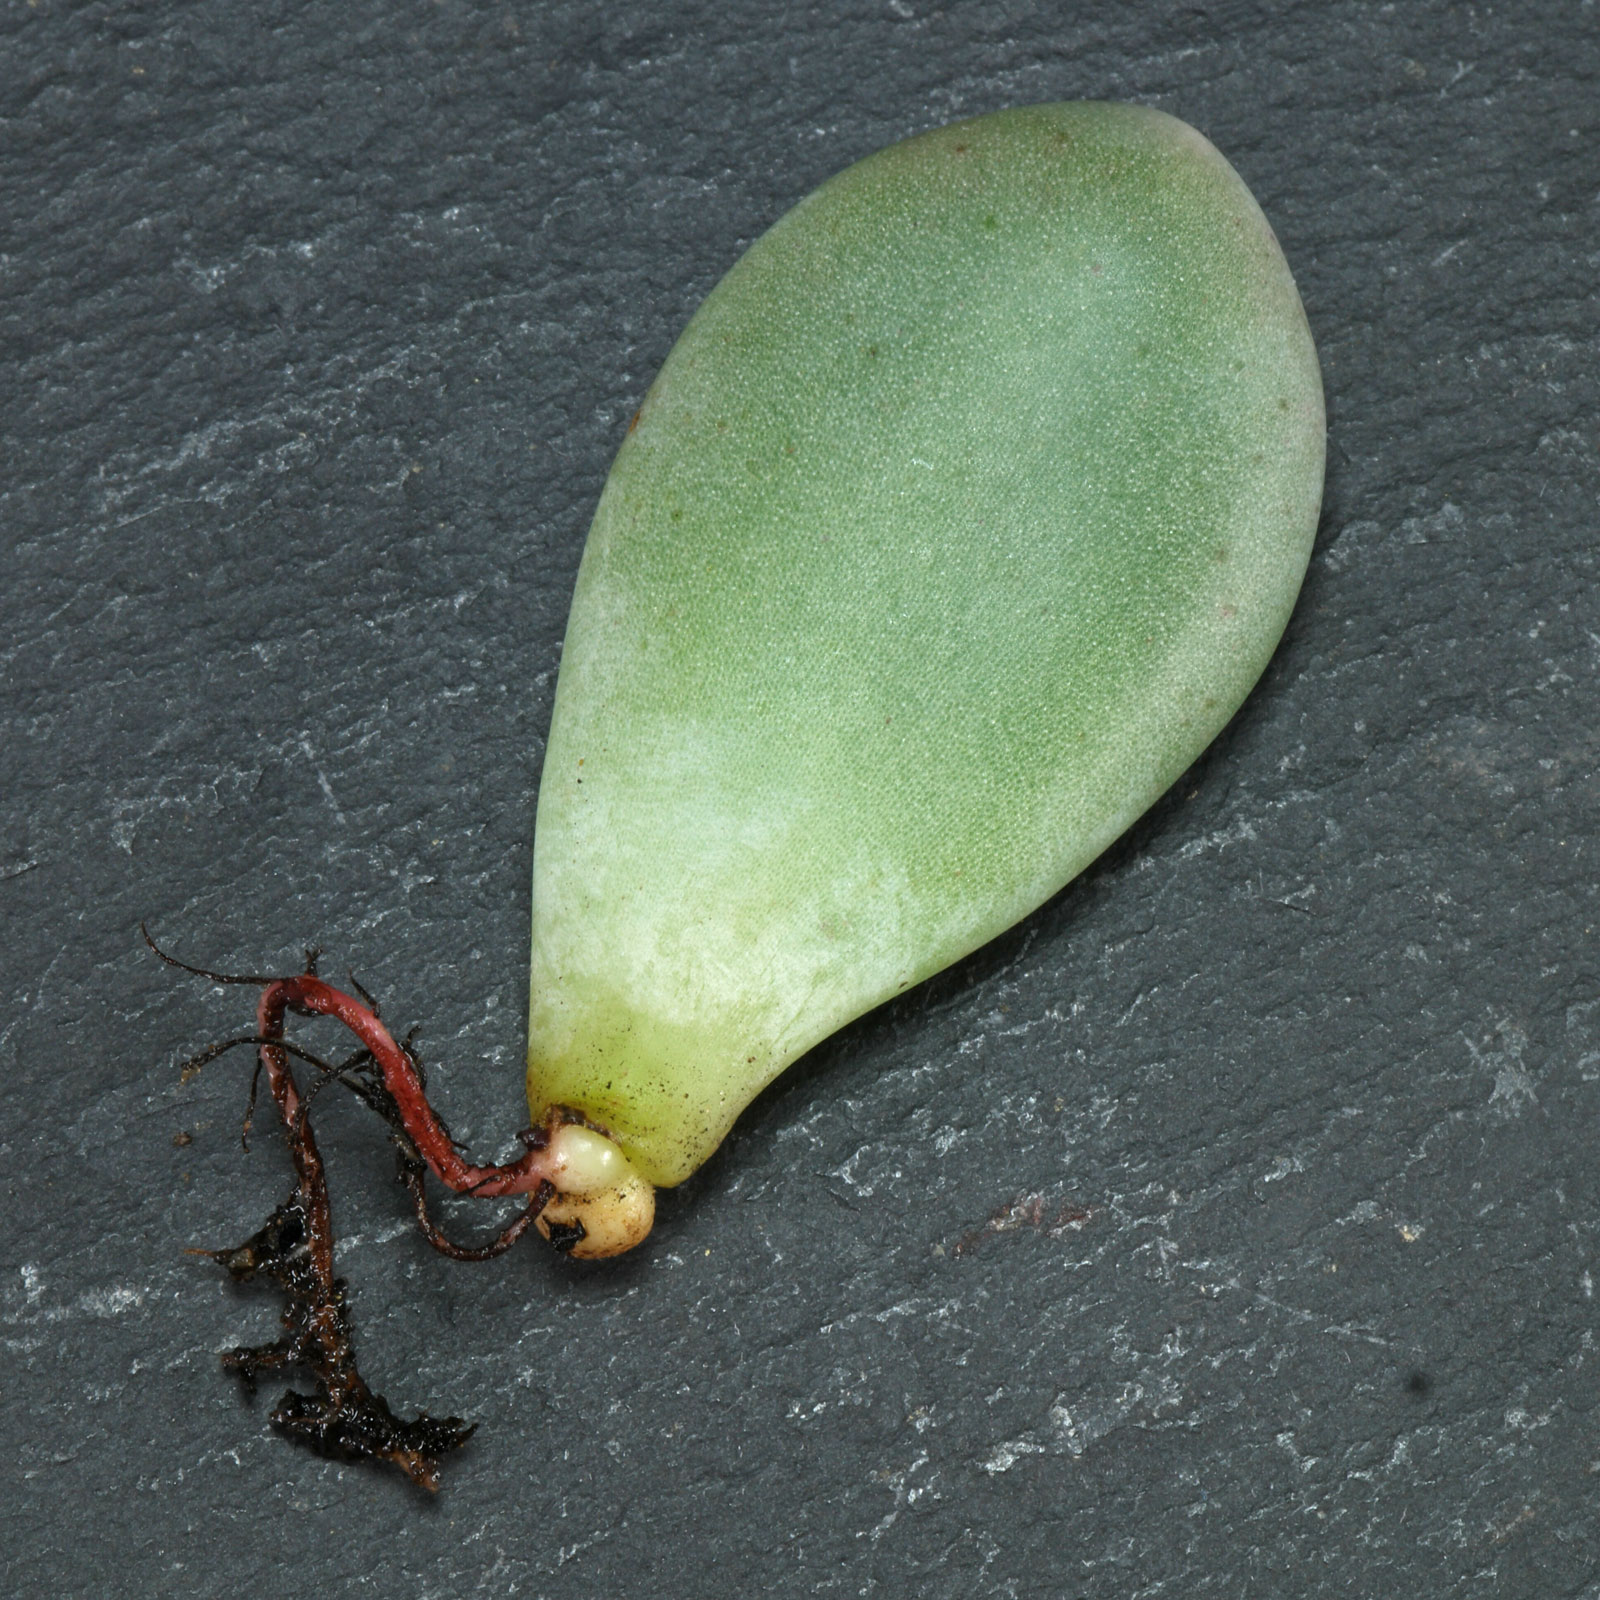 Pachyphytum oviferum